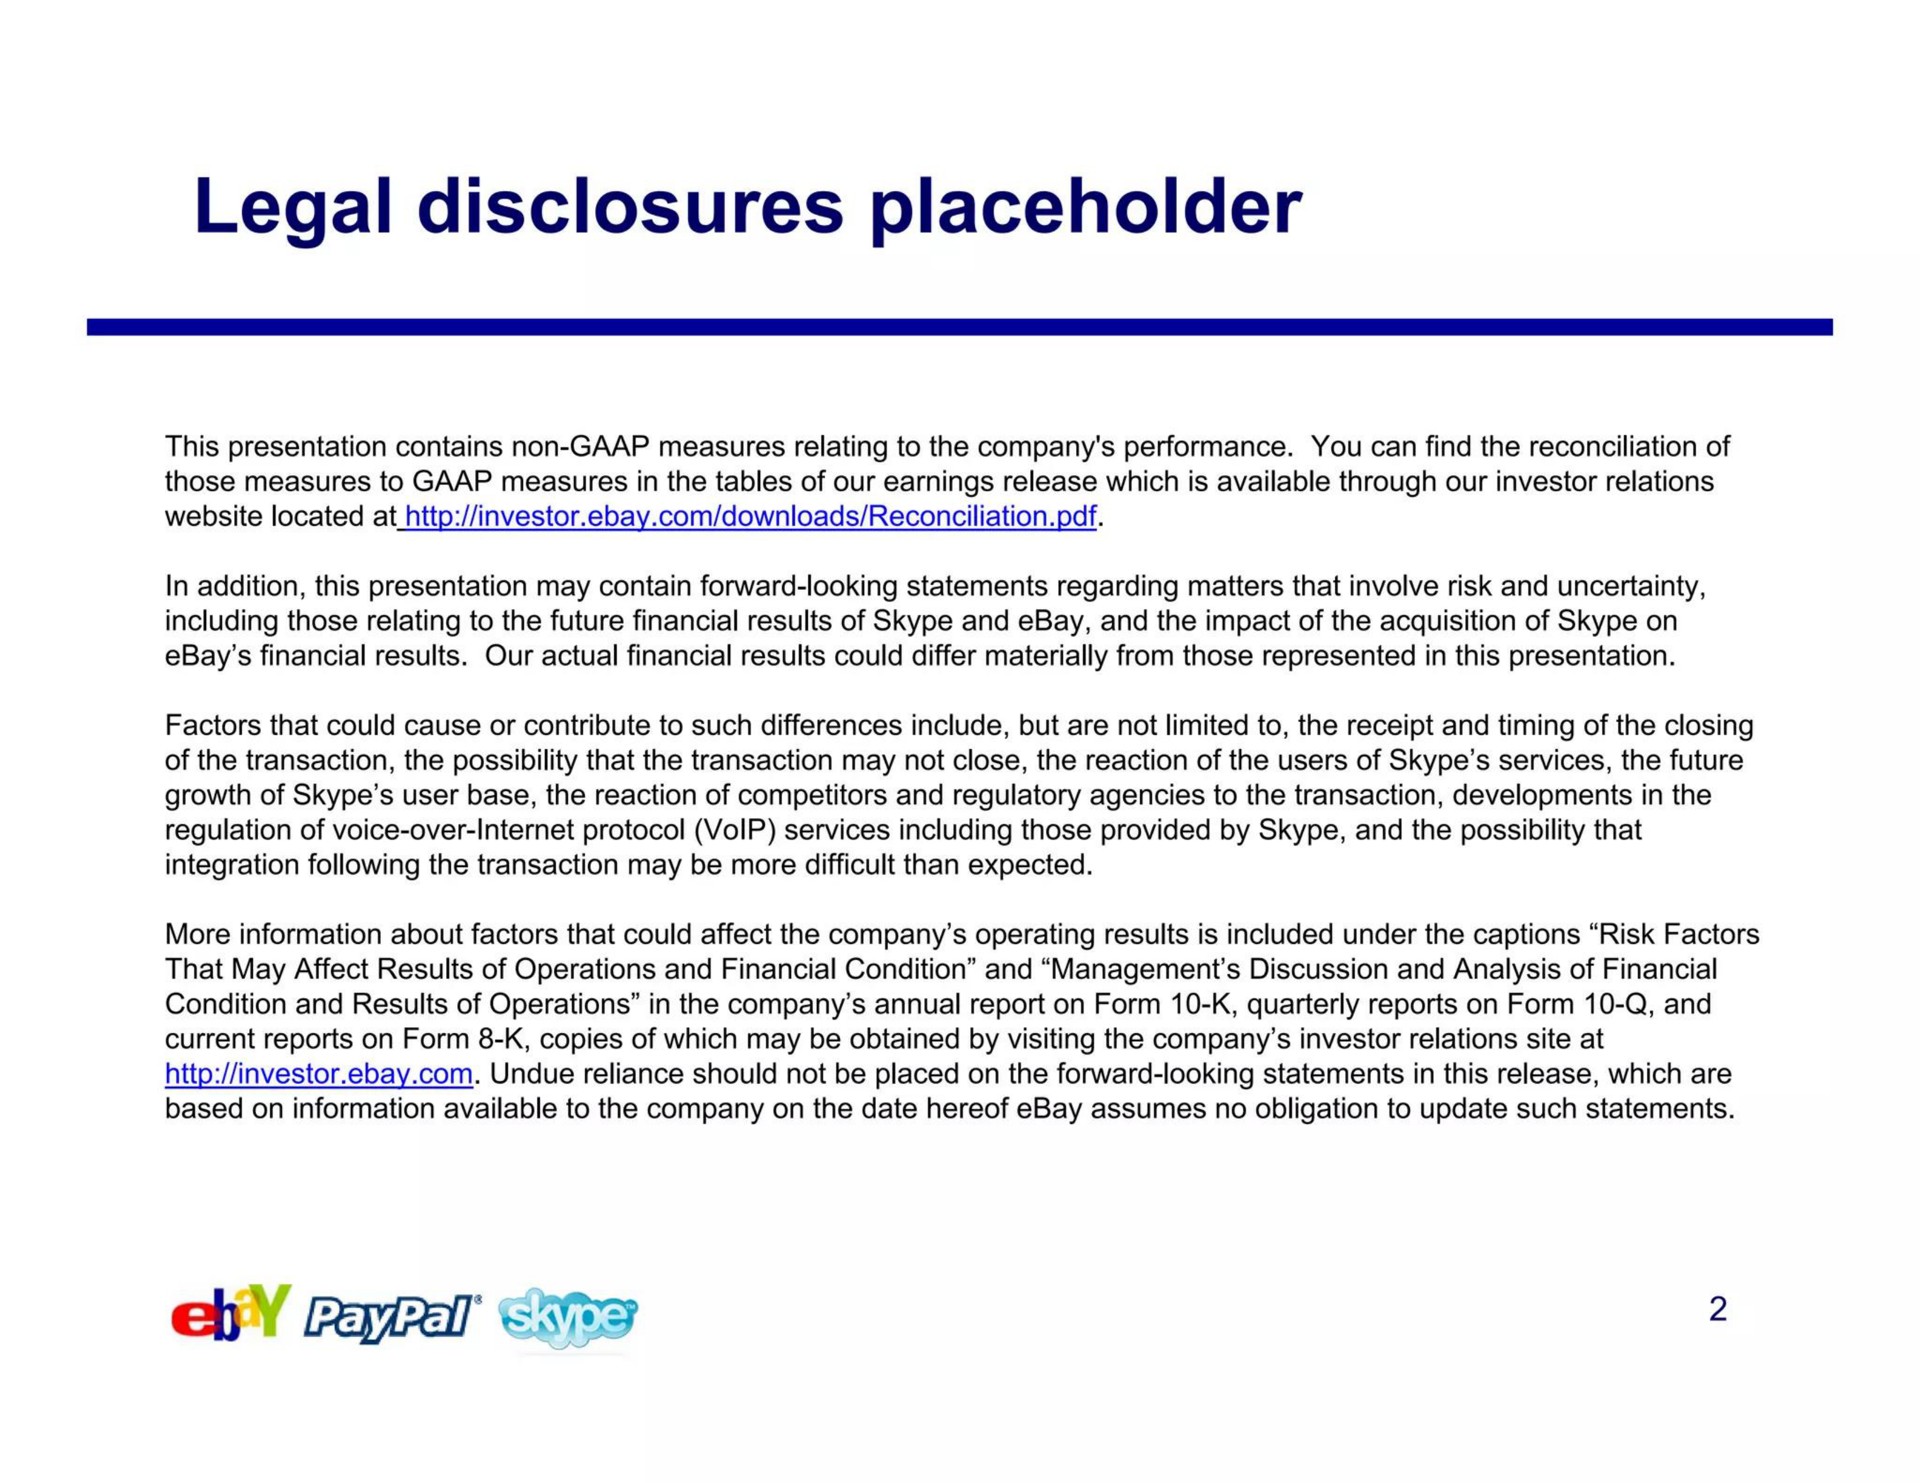 legal disclosures | eBay